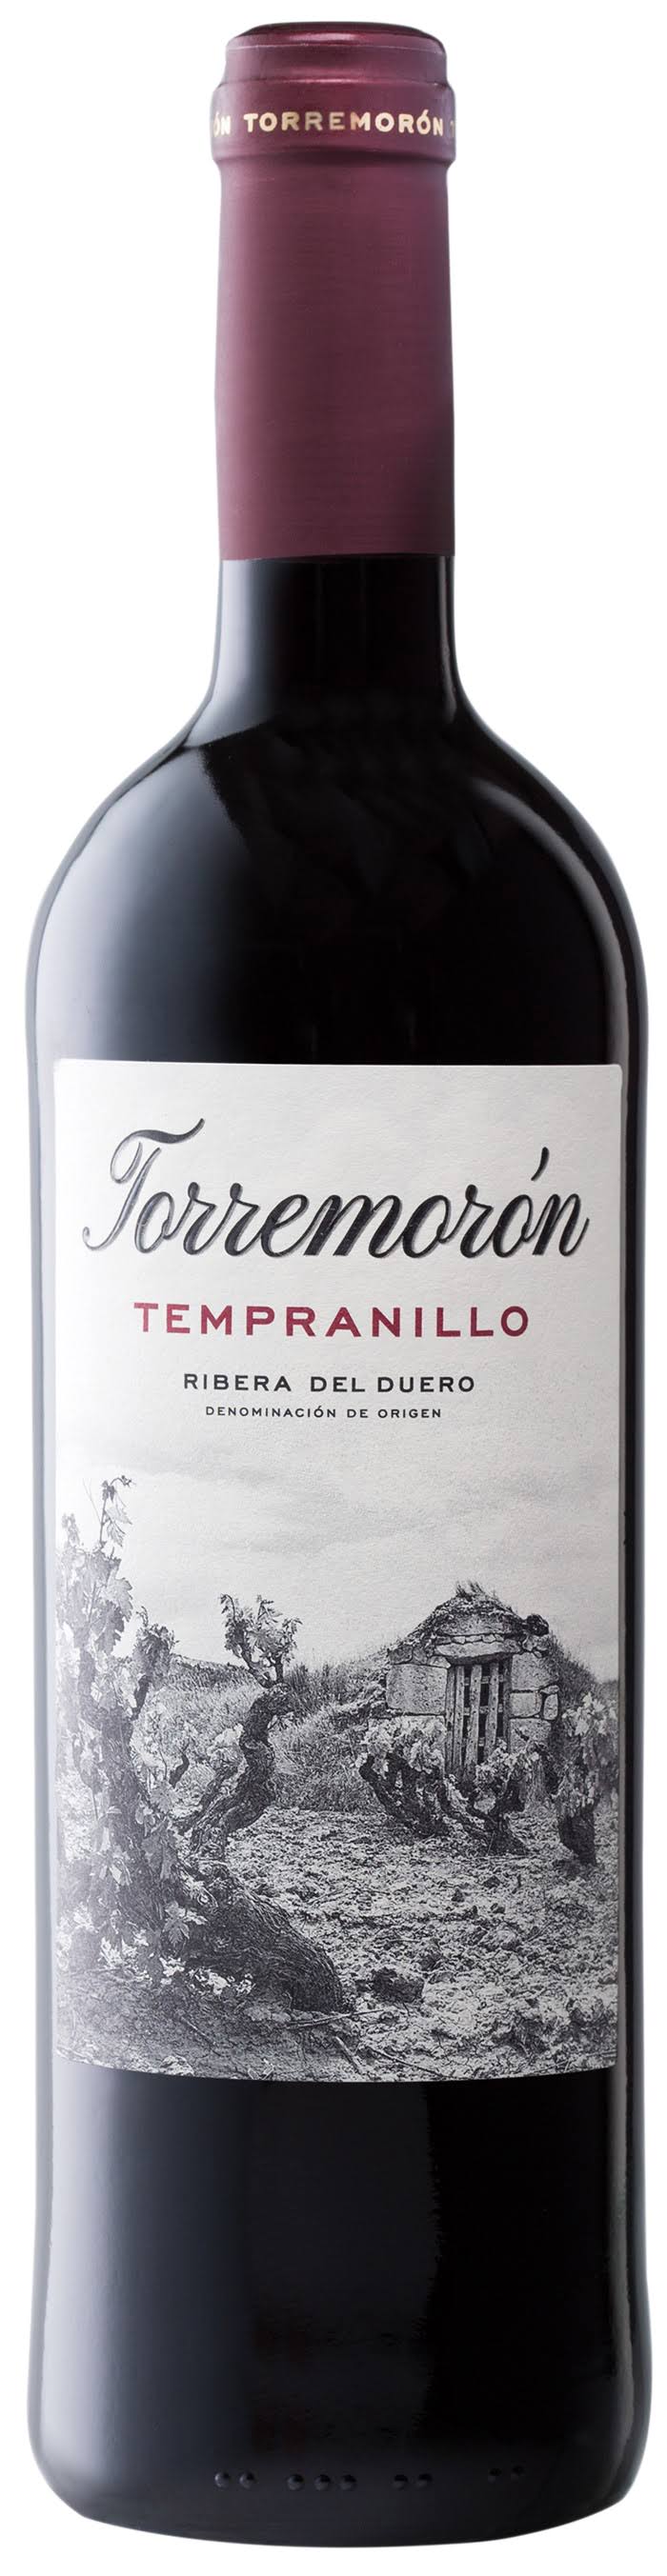 Ribera Del Duero Torremoron Tempranillo, Spain (Vintage Varies) - 750 ml bottle